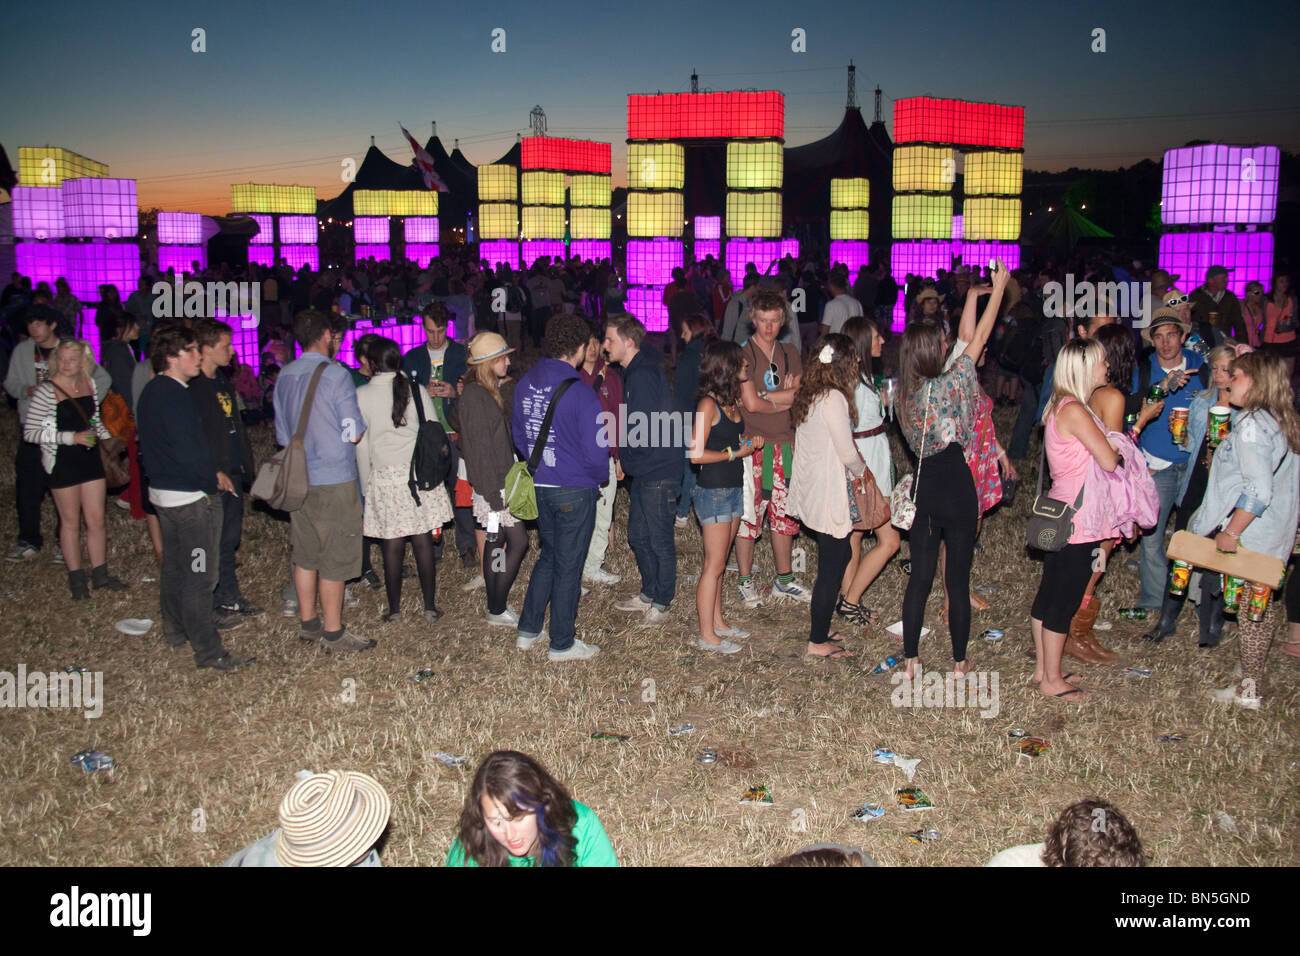 Cubehenge - stonehenge recreated out of glowing coloured cubes, Dance arena, Glastonbury festival 2010 Stock Photo